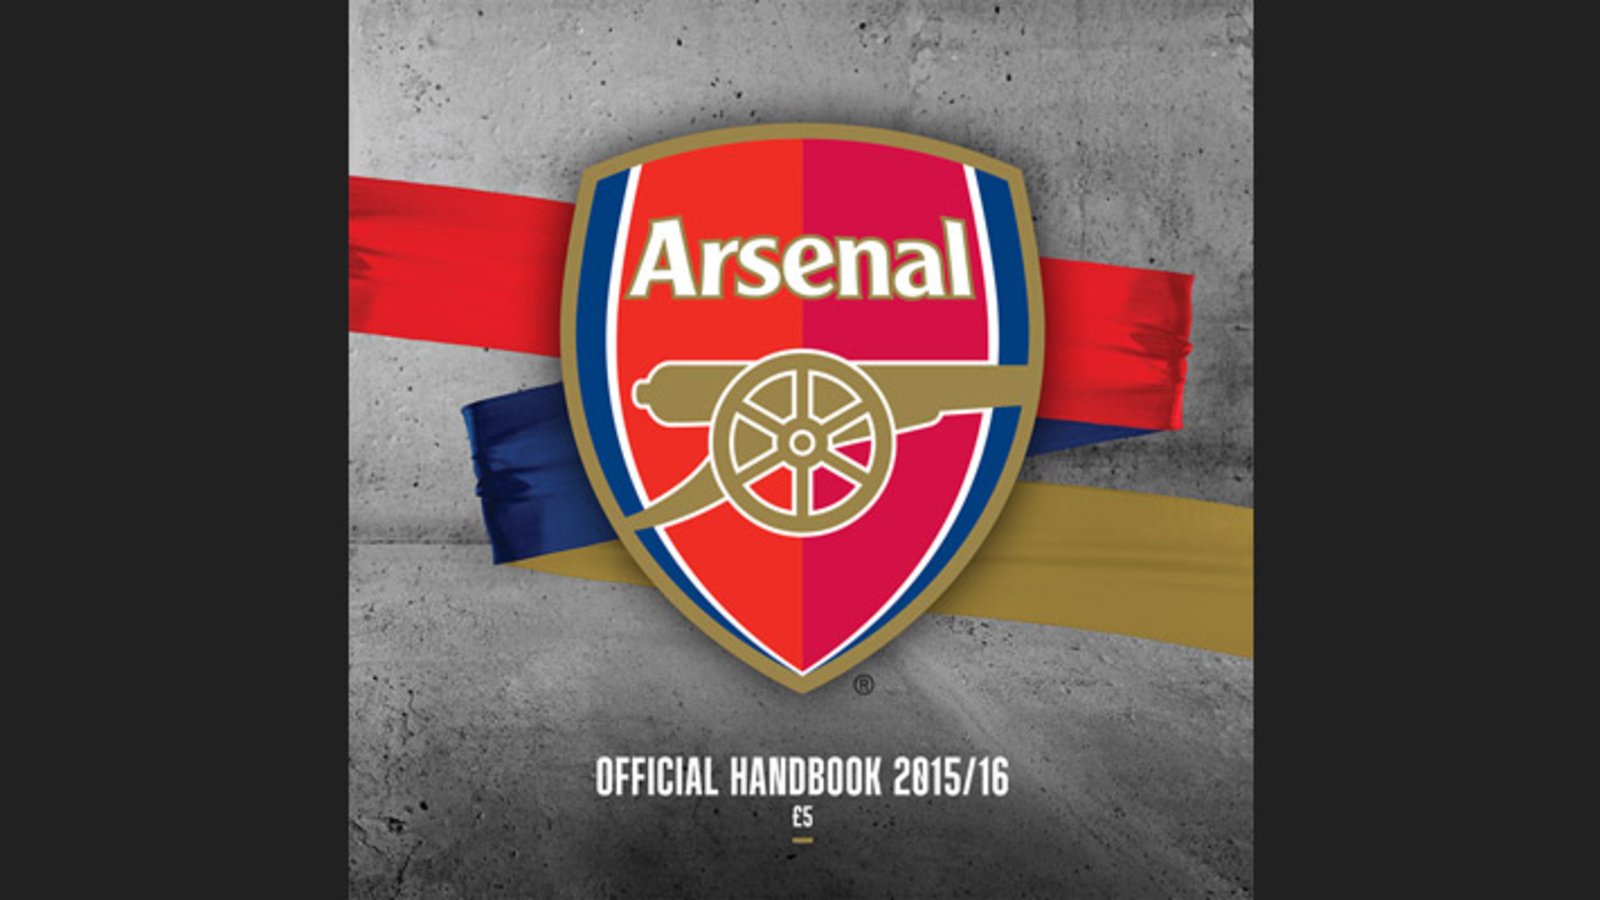 Get the Arsenal Handbook - News - Arsenal.com